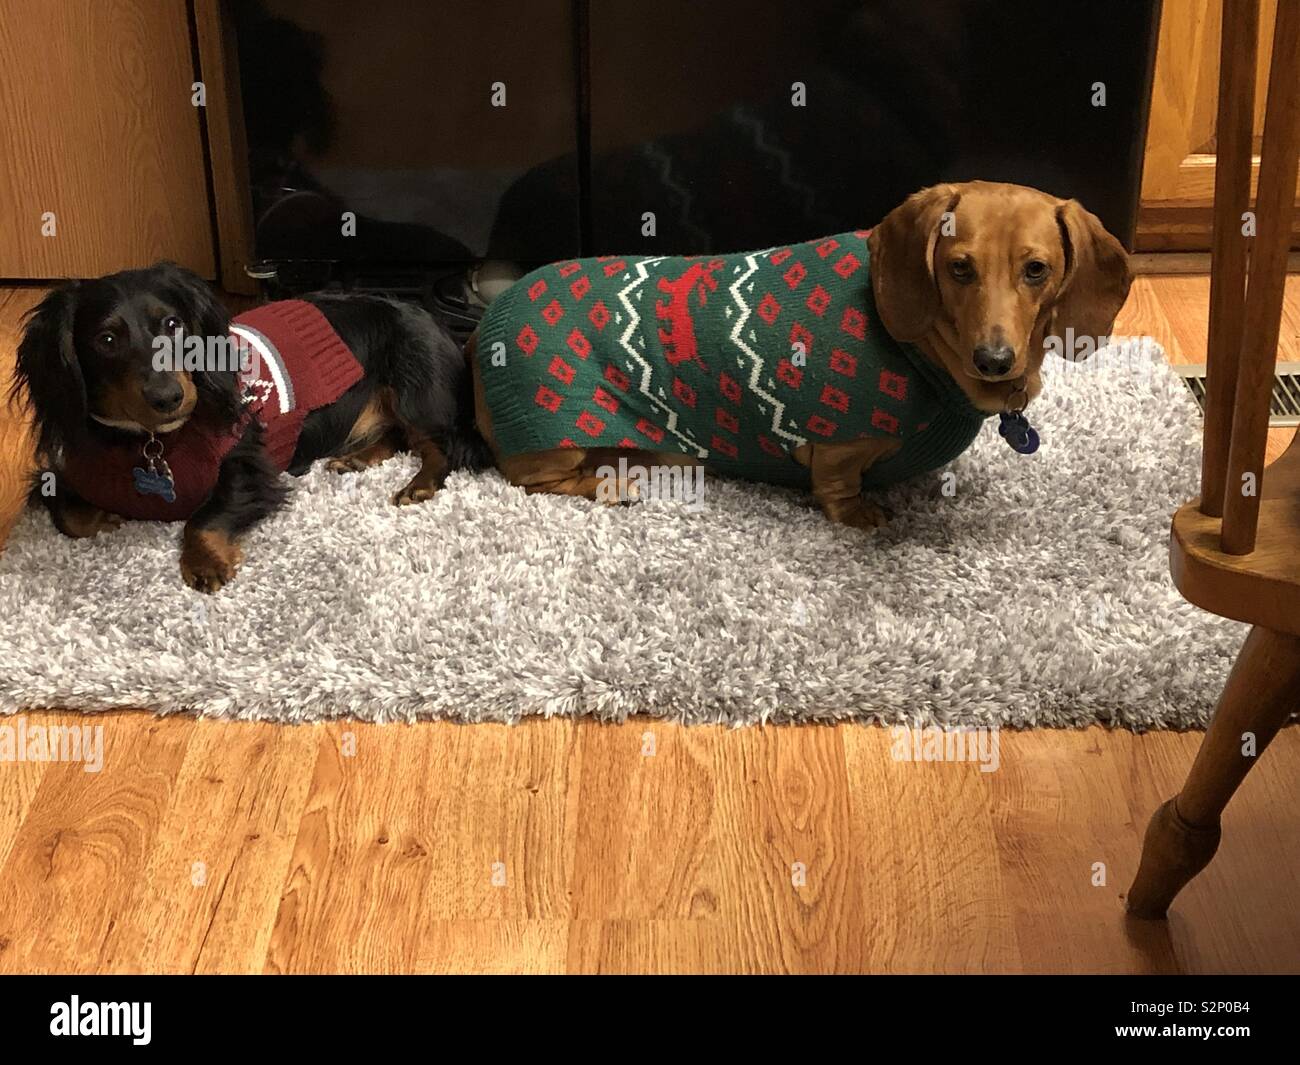 Dachshunds wearing sweaters Stock Photo